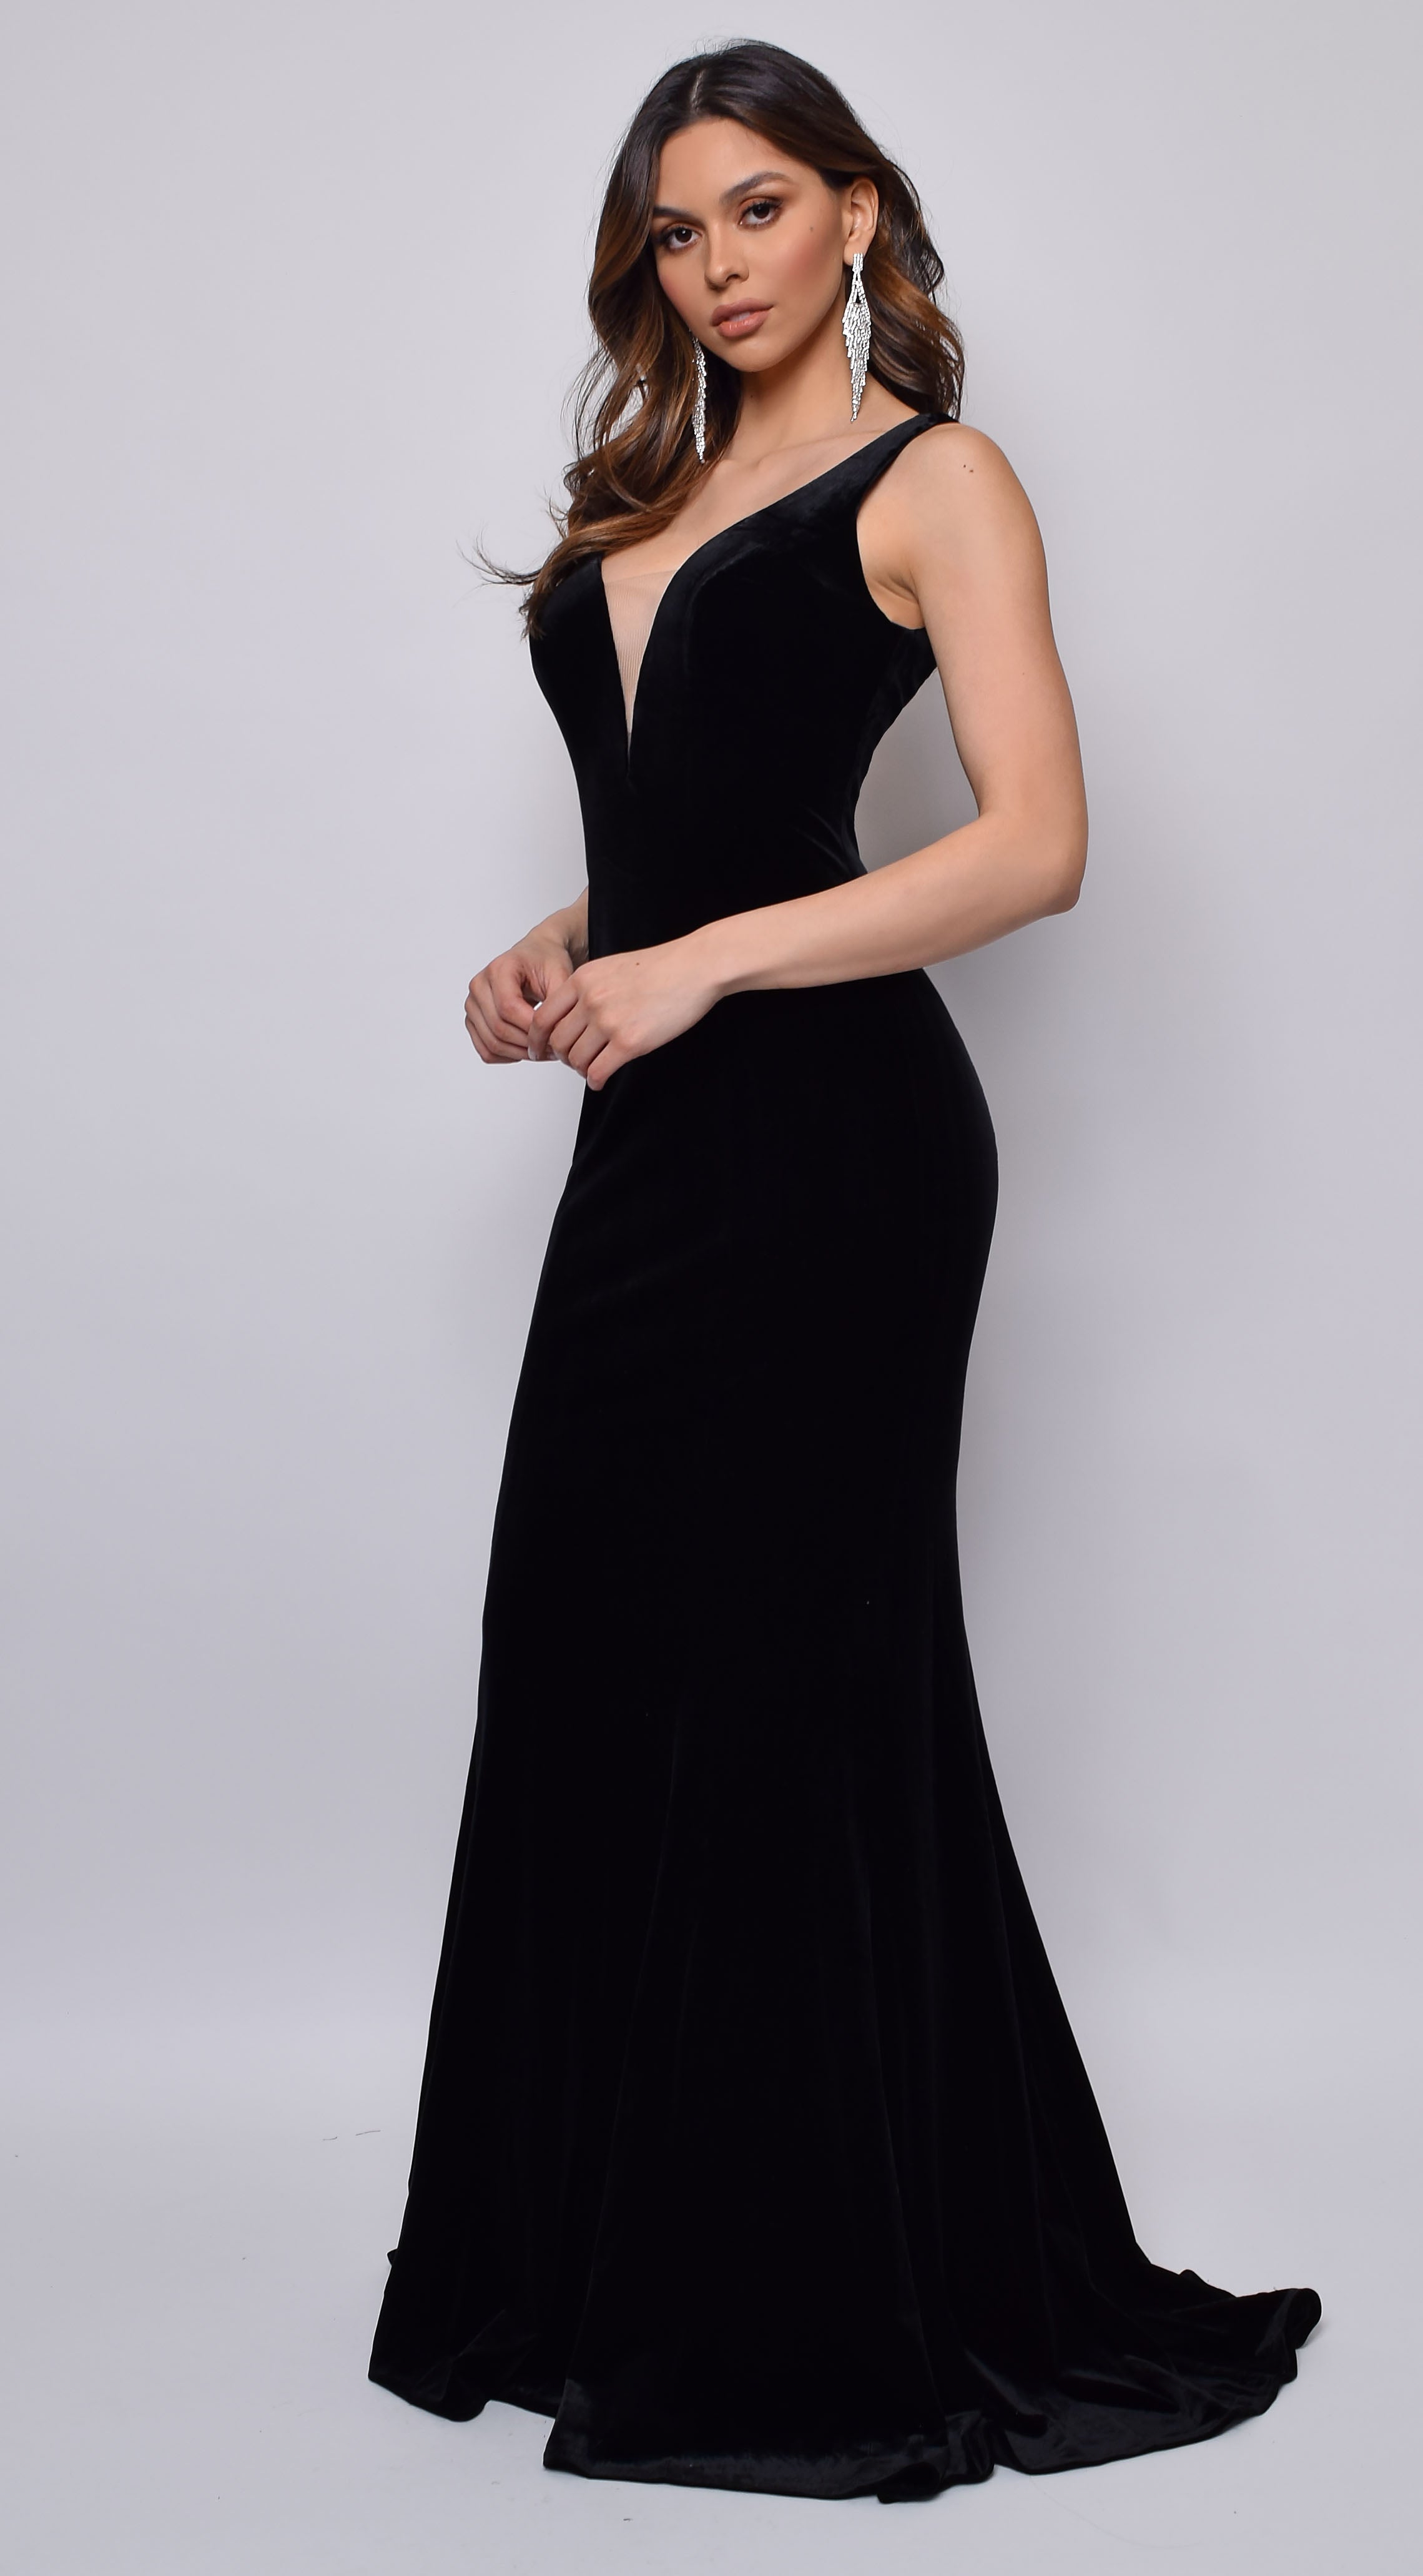 Selena Gomez's Oscar de La Renta Dress at 2022 SAG Awards | POPSUGAR Fashion